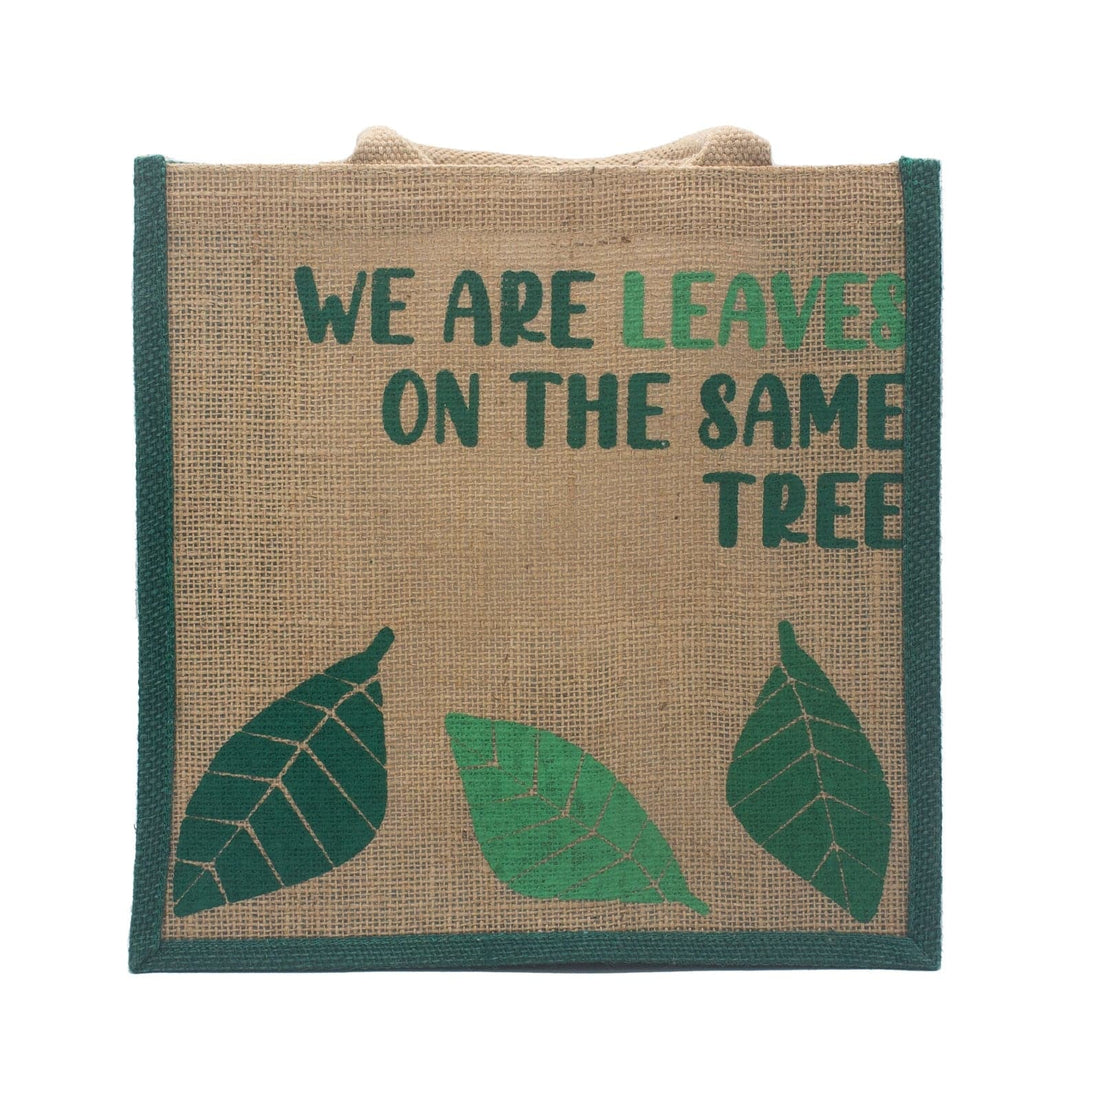 Printed Jute Bag - We are Leaves - Natural - best price from Maltashopper.com PJB-02C